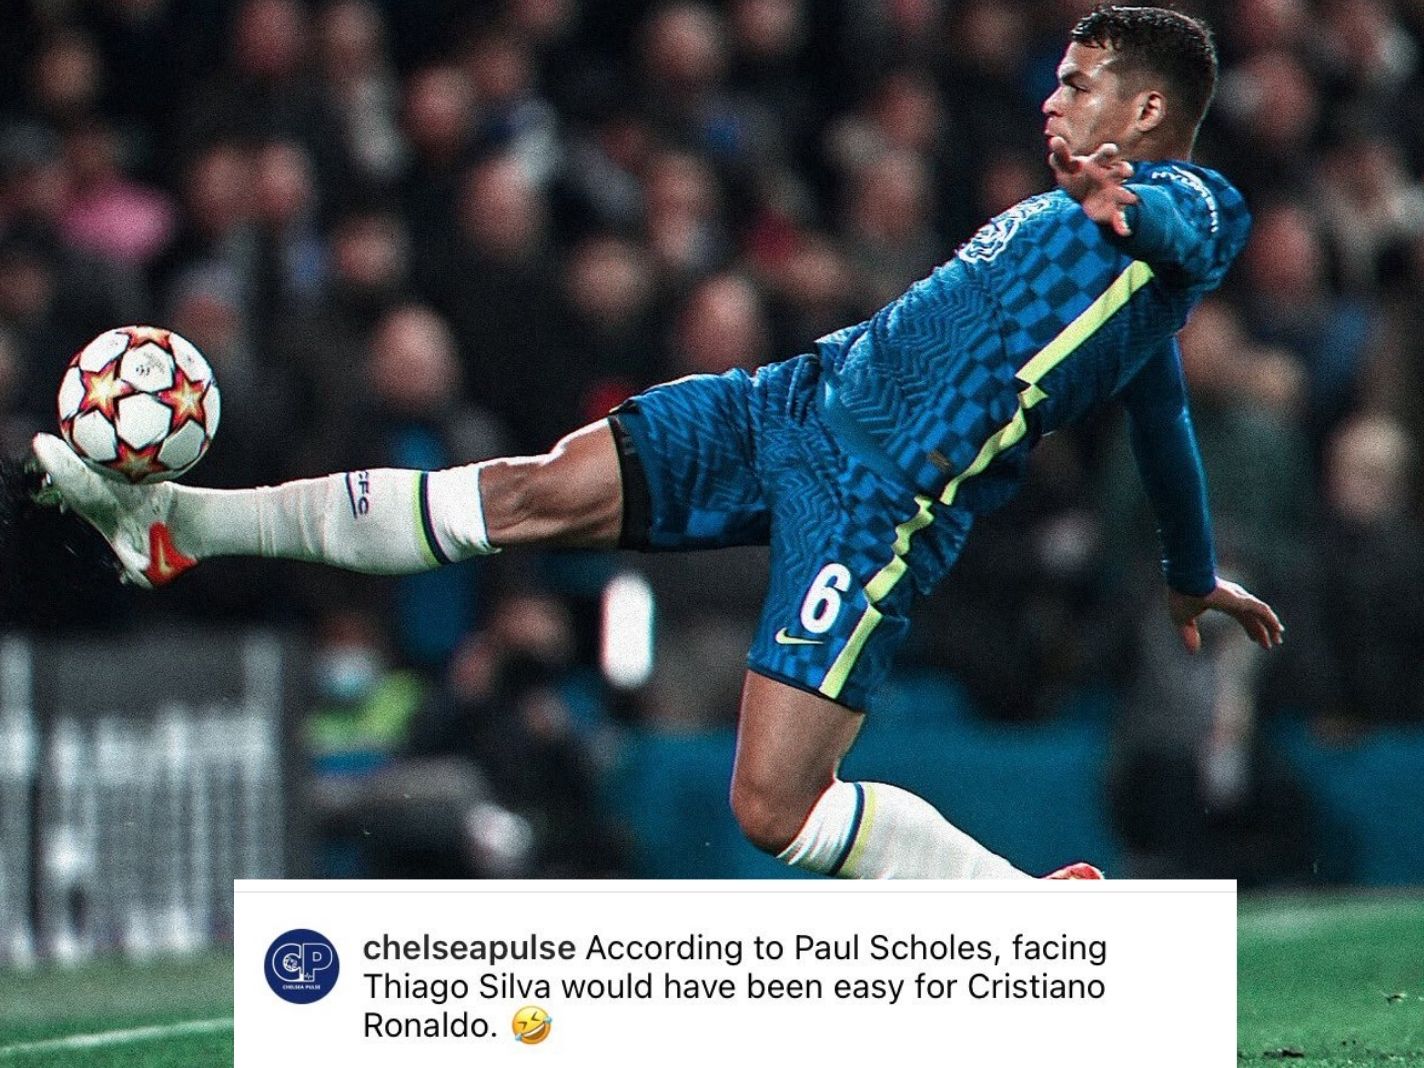 Thiago Silva fires back after disparaging Paul Scholes claim before Chelsea v Man Utd